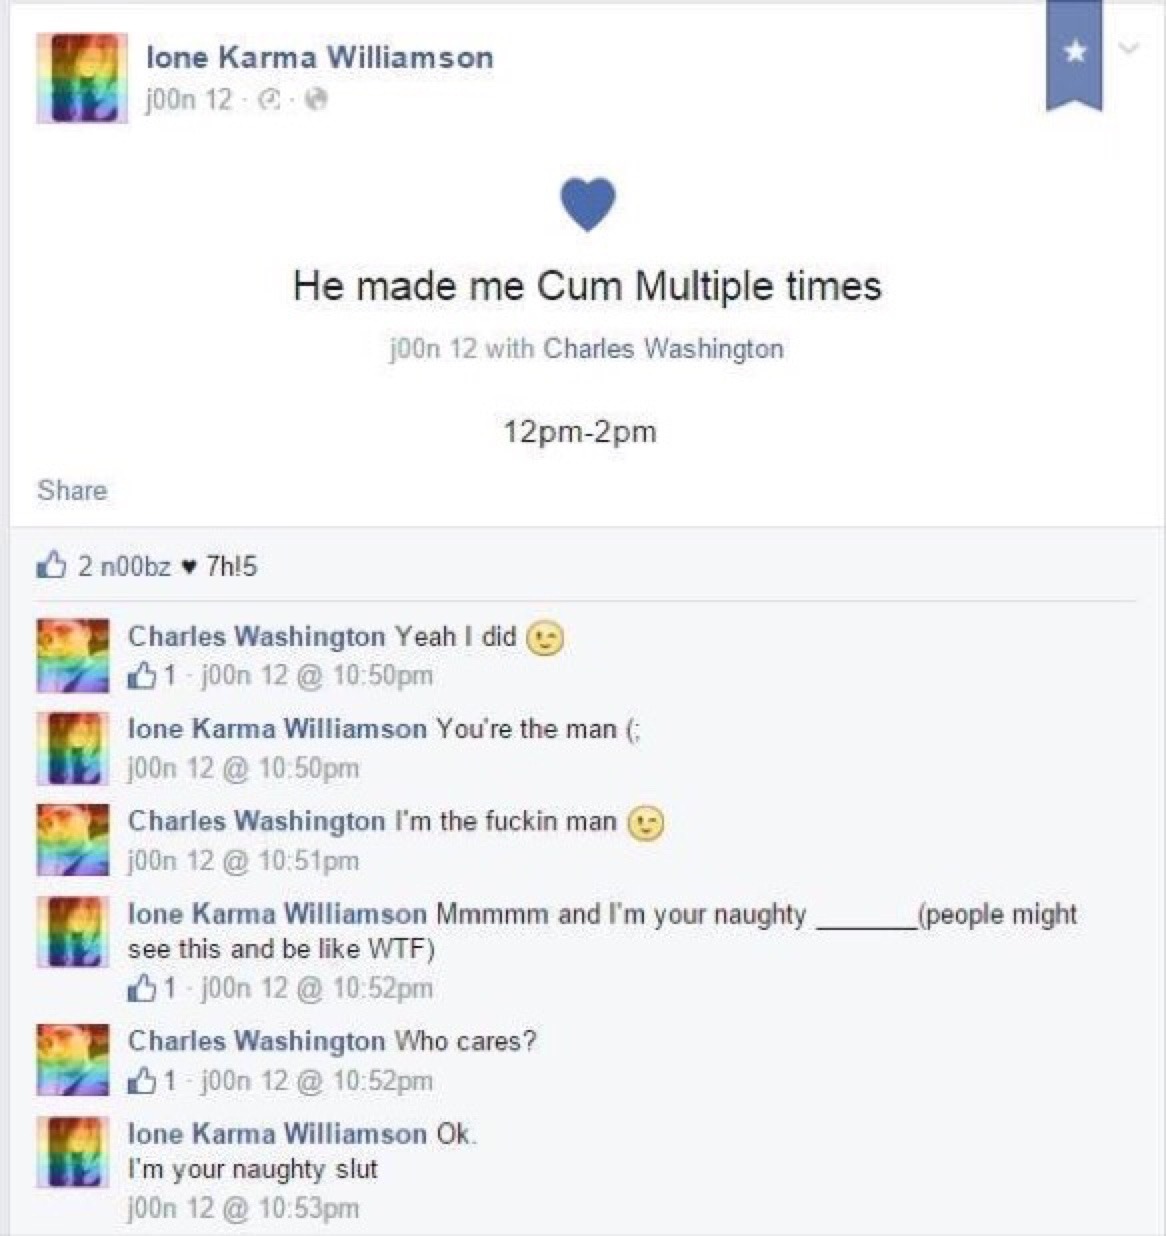 Making him cum multiple times